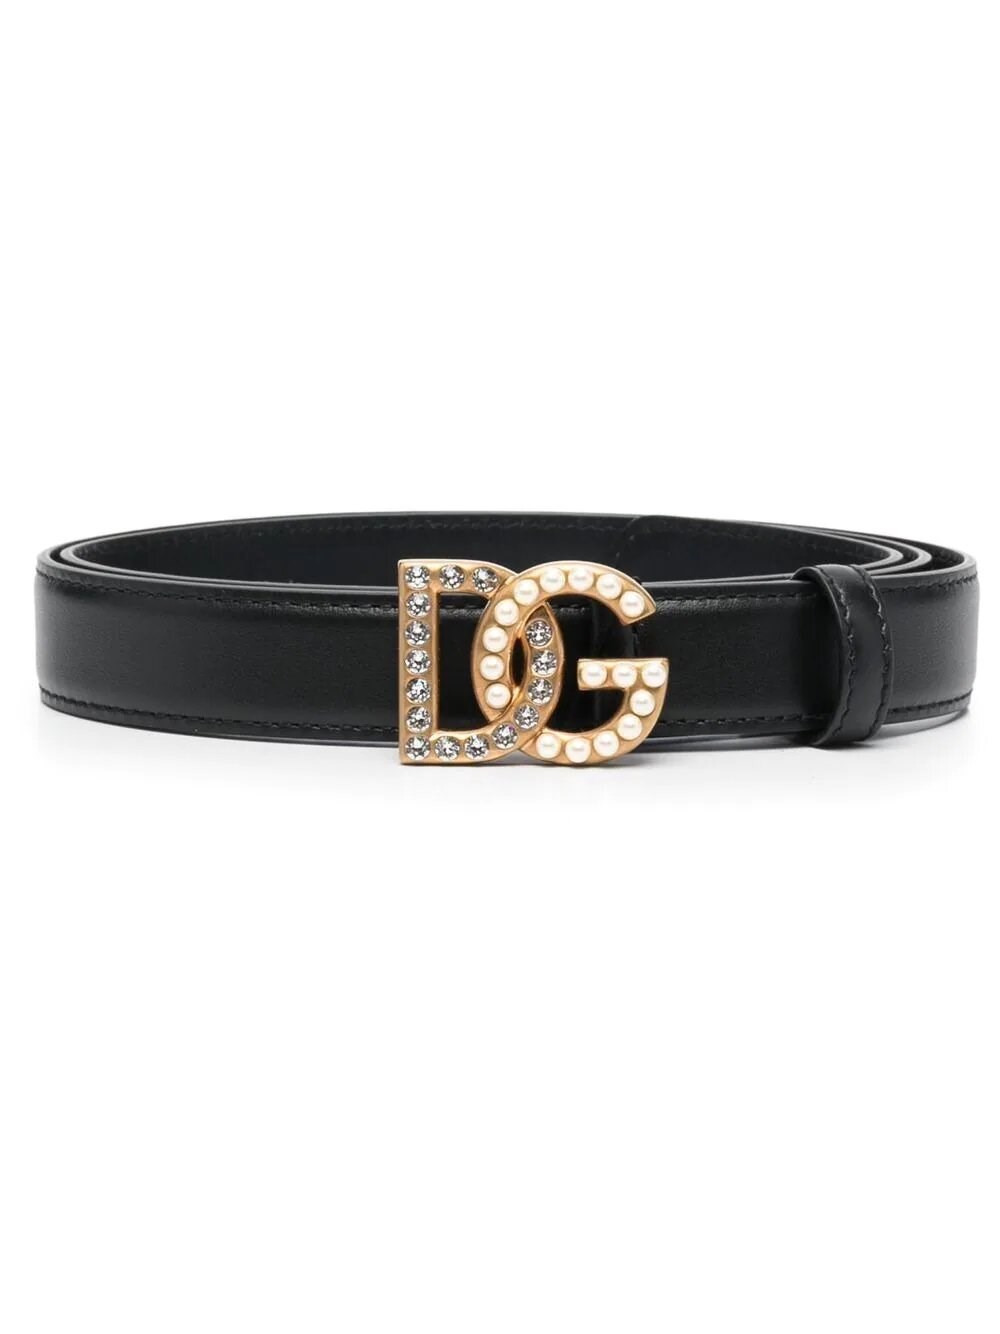 Dolce & Gabbana Dg Strass Belt In Black  